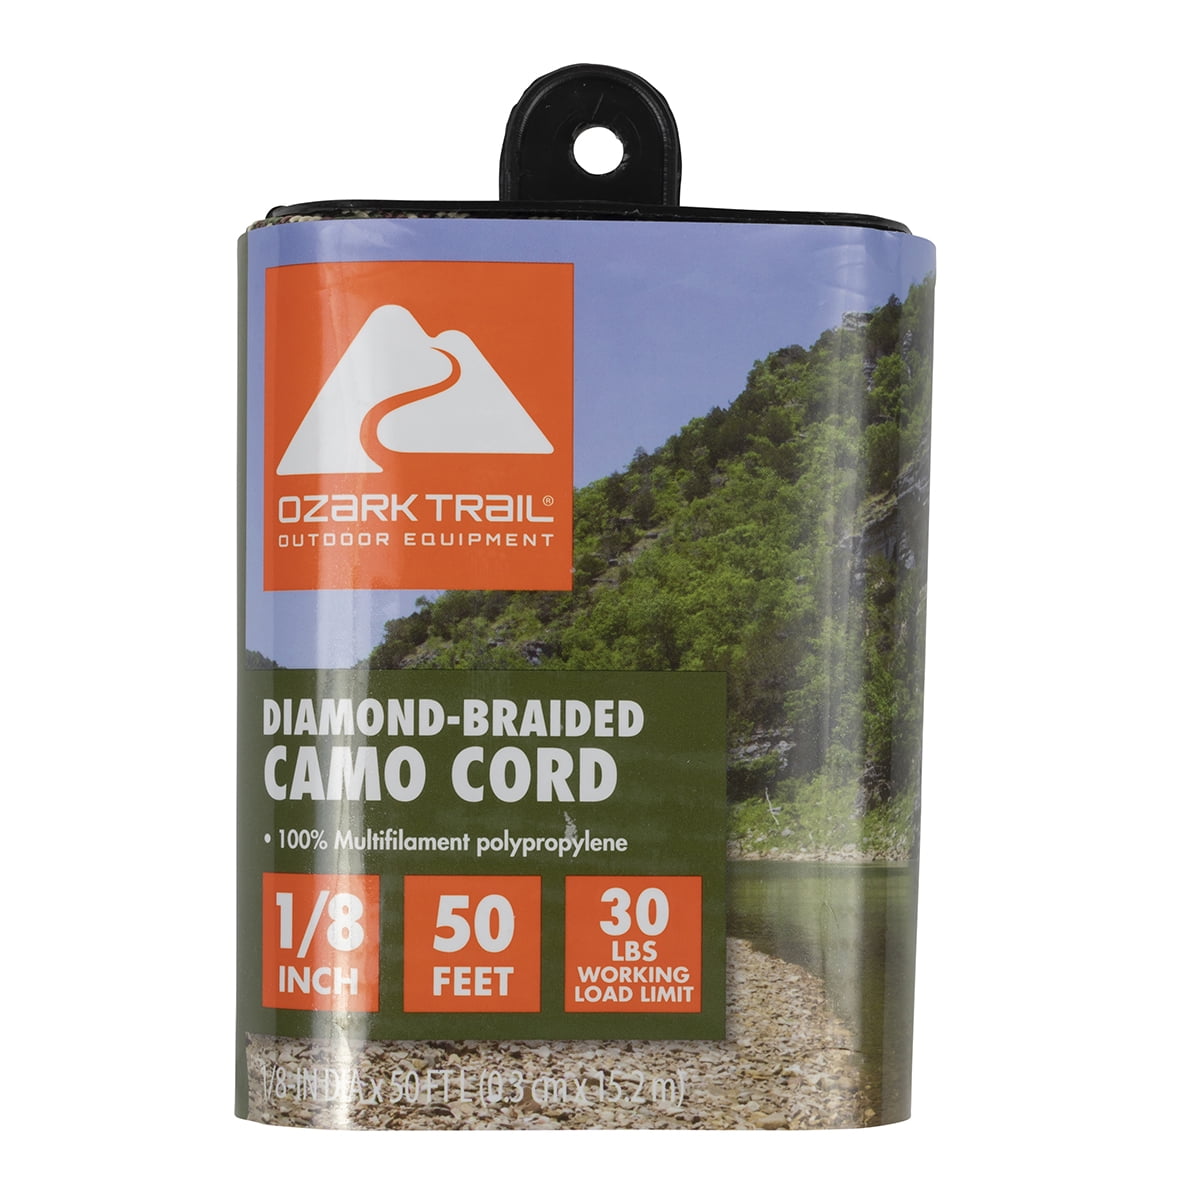 Ozark Trail 1/8 x 50' Marine Diamond-Braided Camo Cord